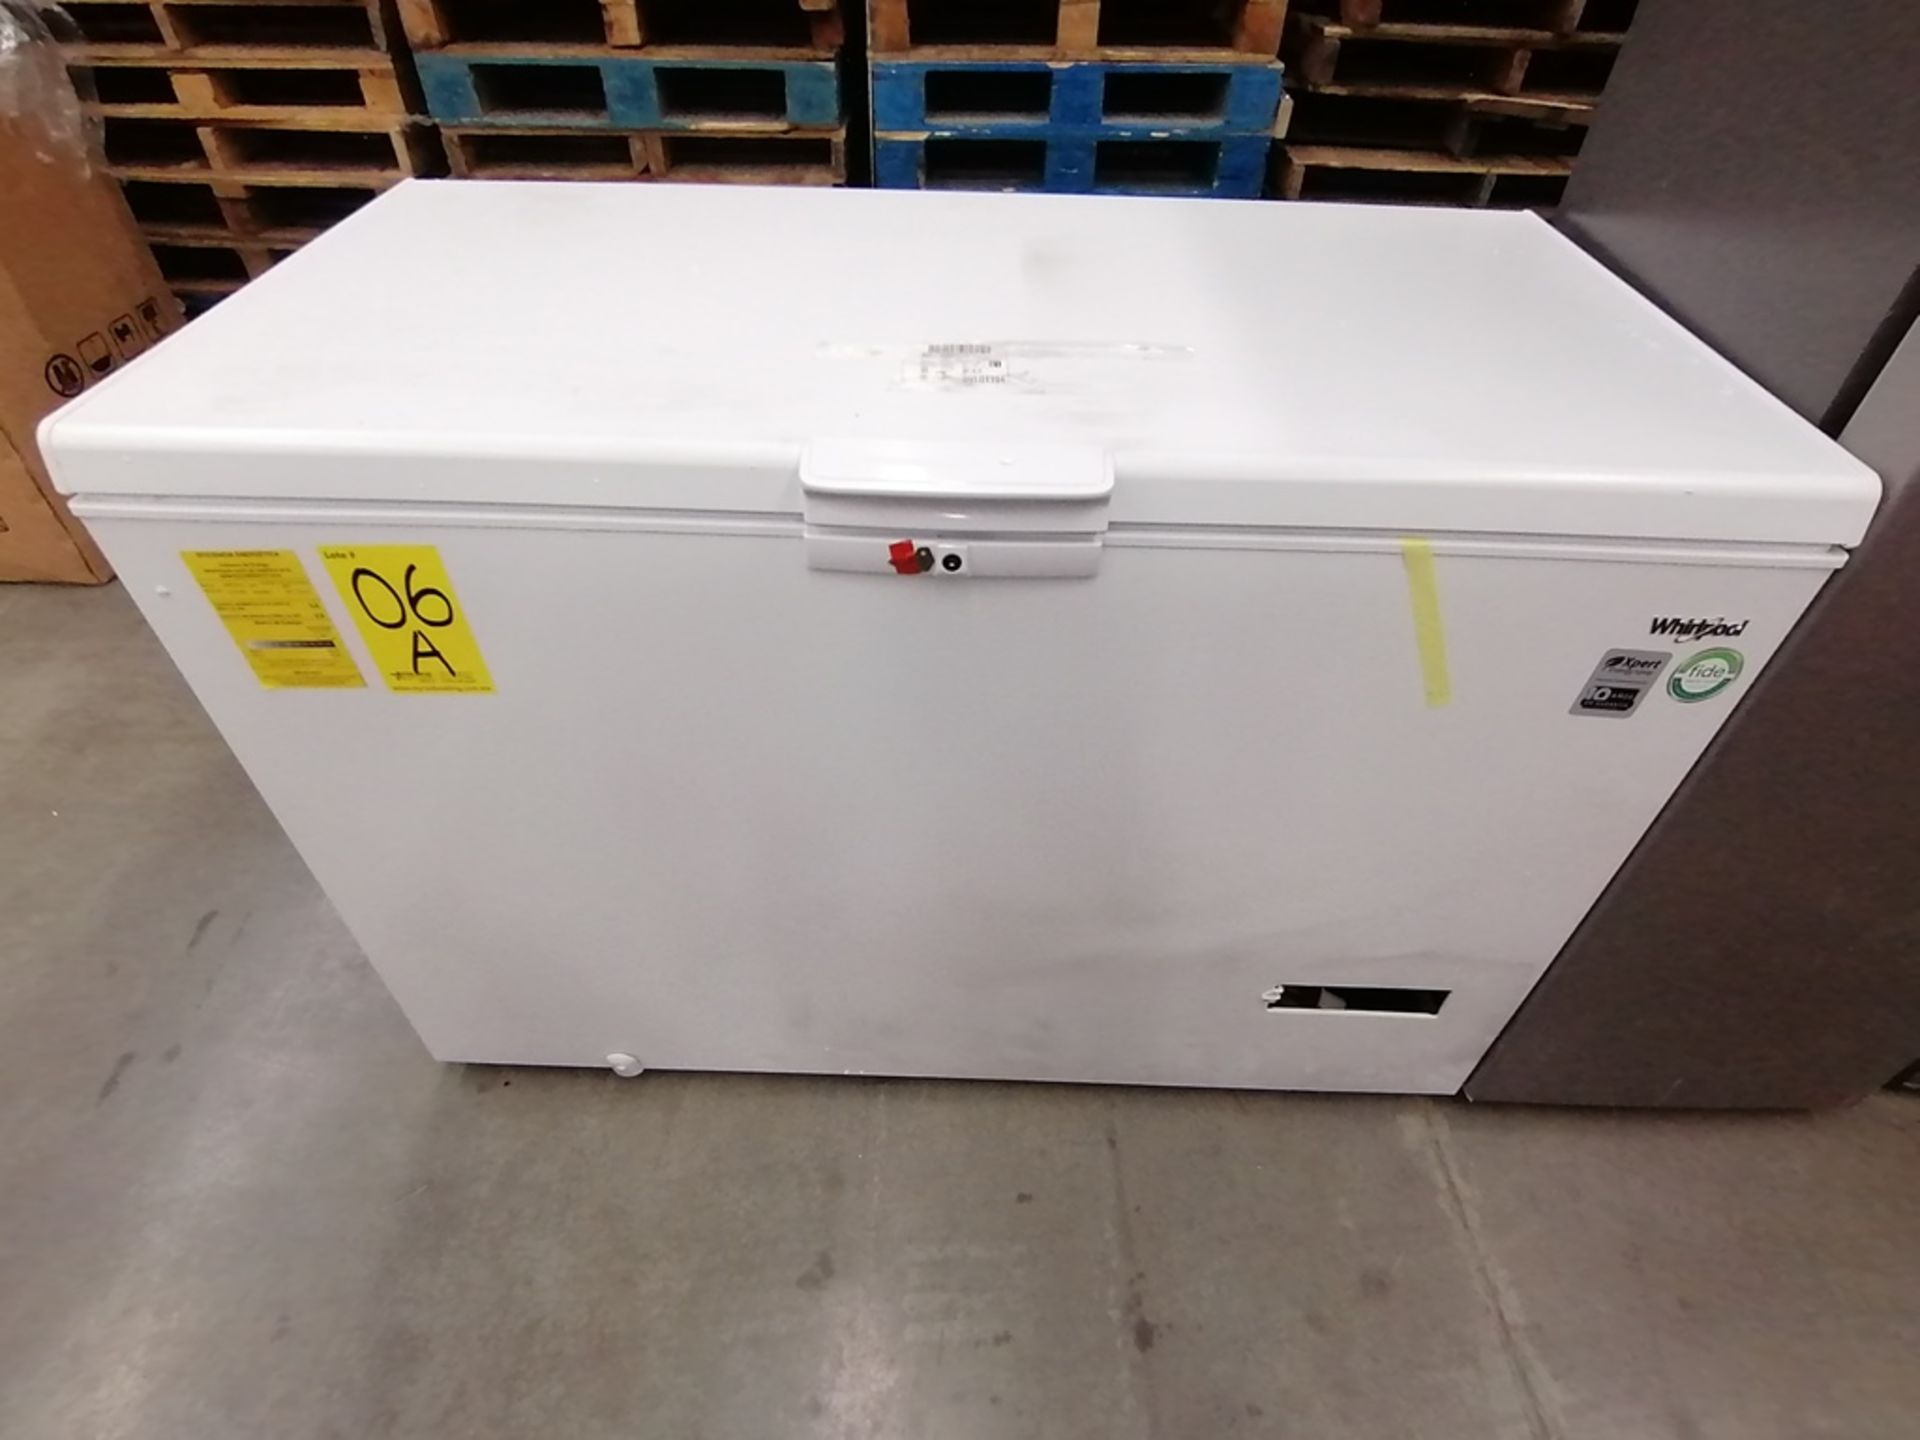 1 Congelador horizontal marca Whirlpool, Modelo WC16016Q, Serie 754959966031, Color Blanco, Golpead - Image 3 of 9